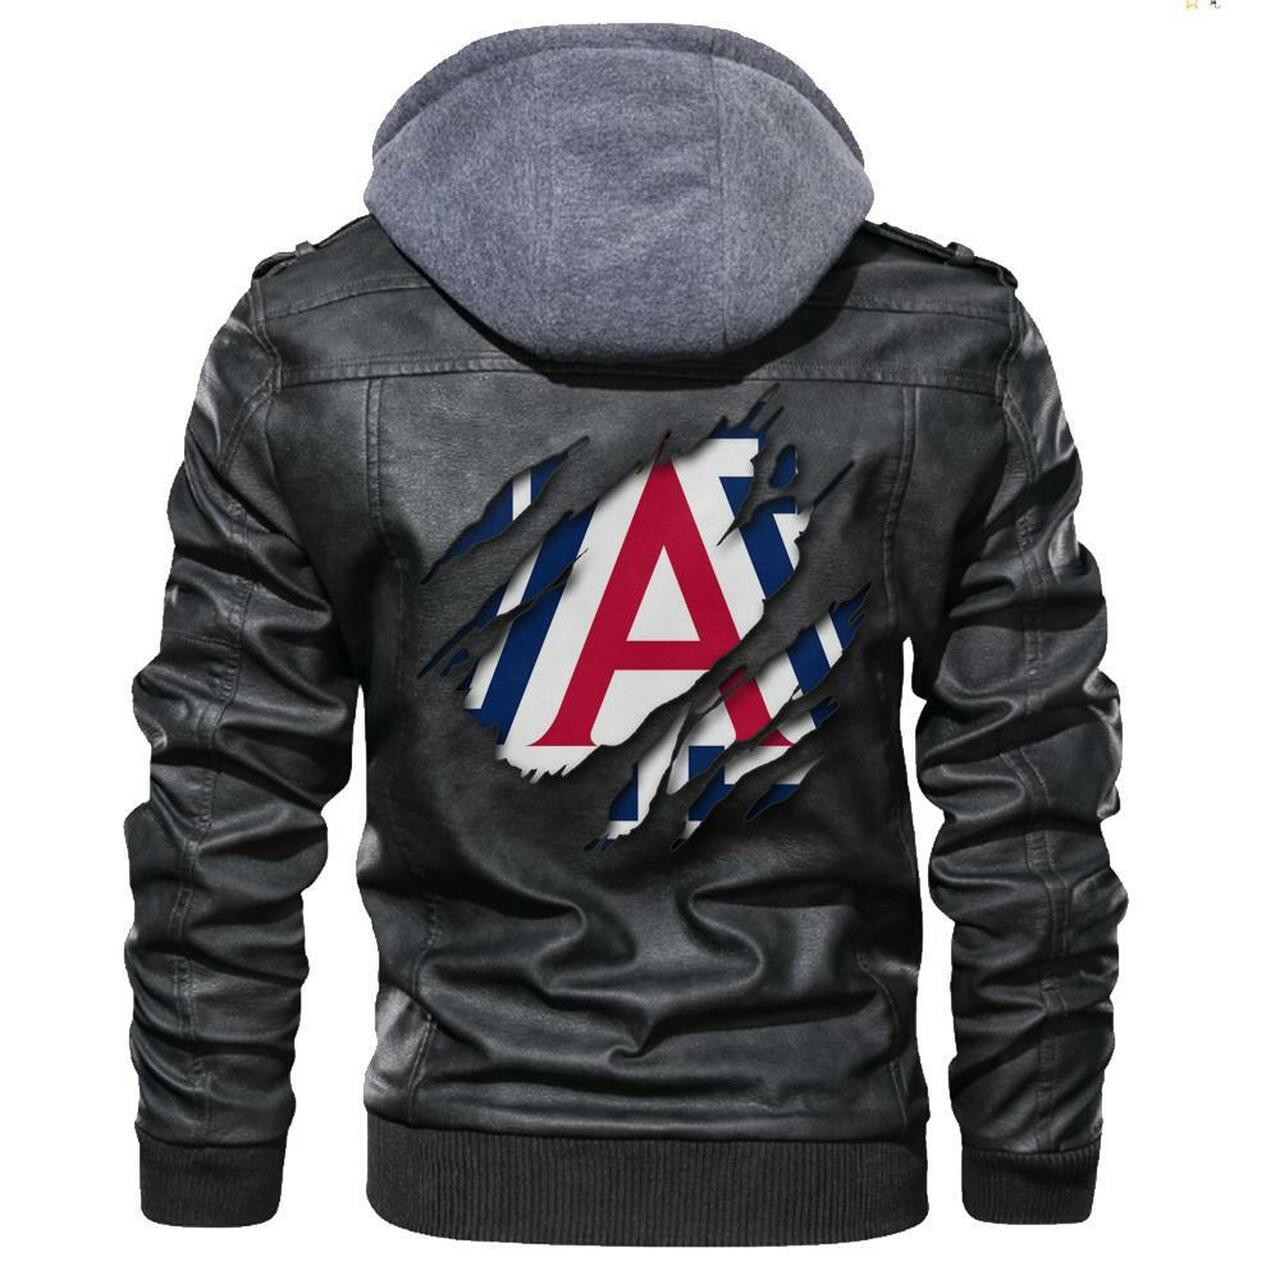 Top leather jacket Sells Best on Techcomshop 35